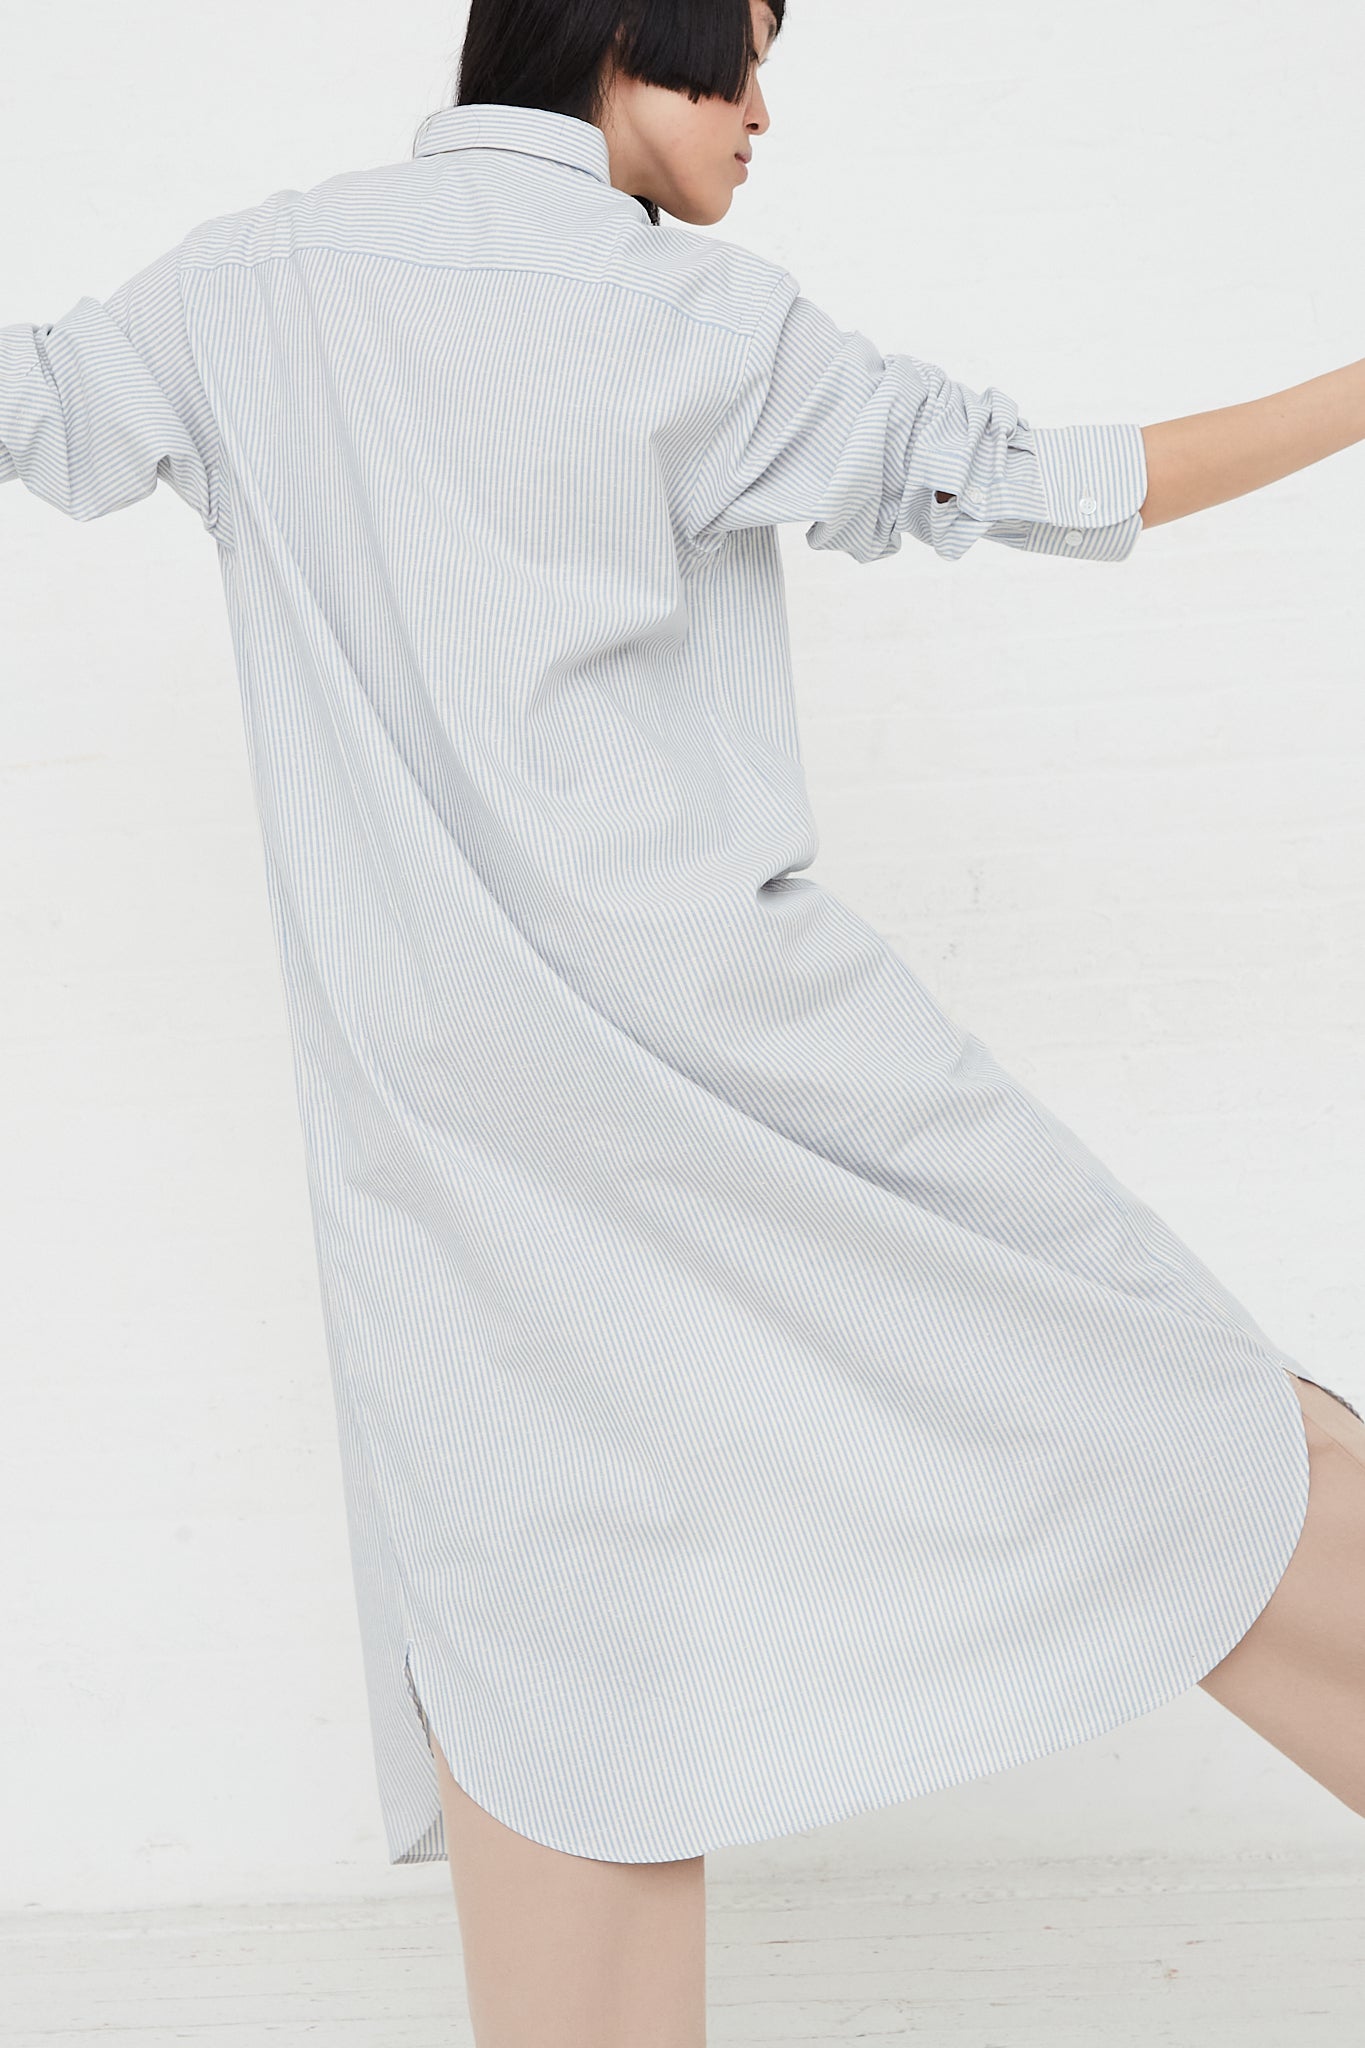 Ole Long Sleeve Shirt Dress in Organic Cotton by Baserange for Oroboro Back